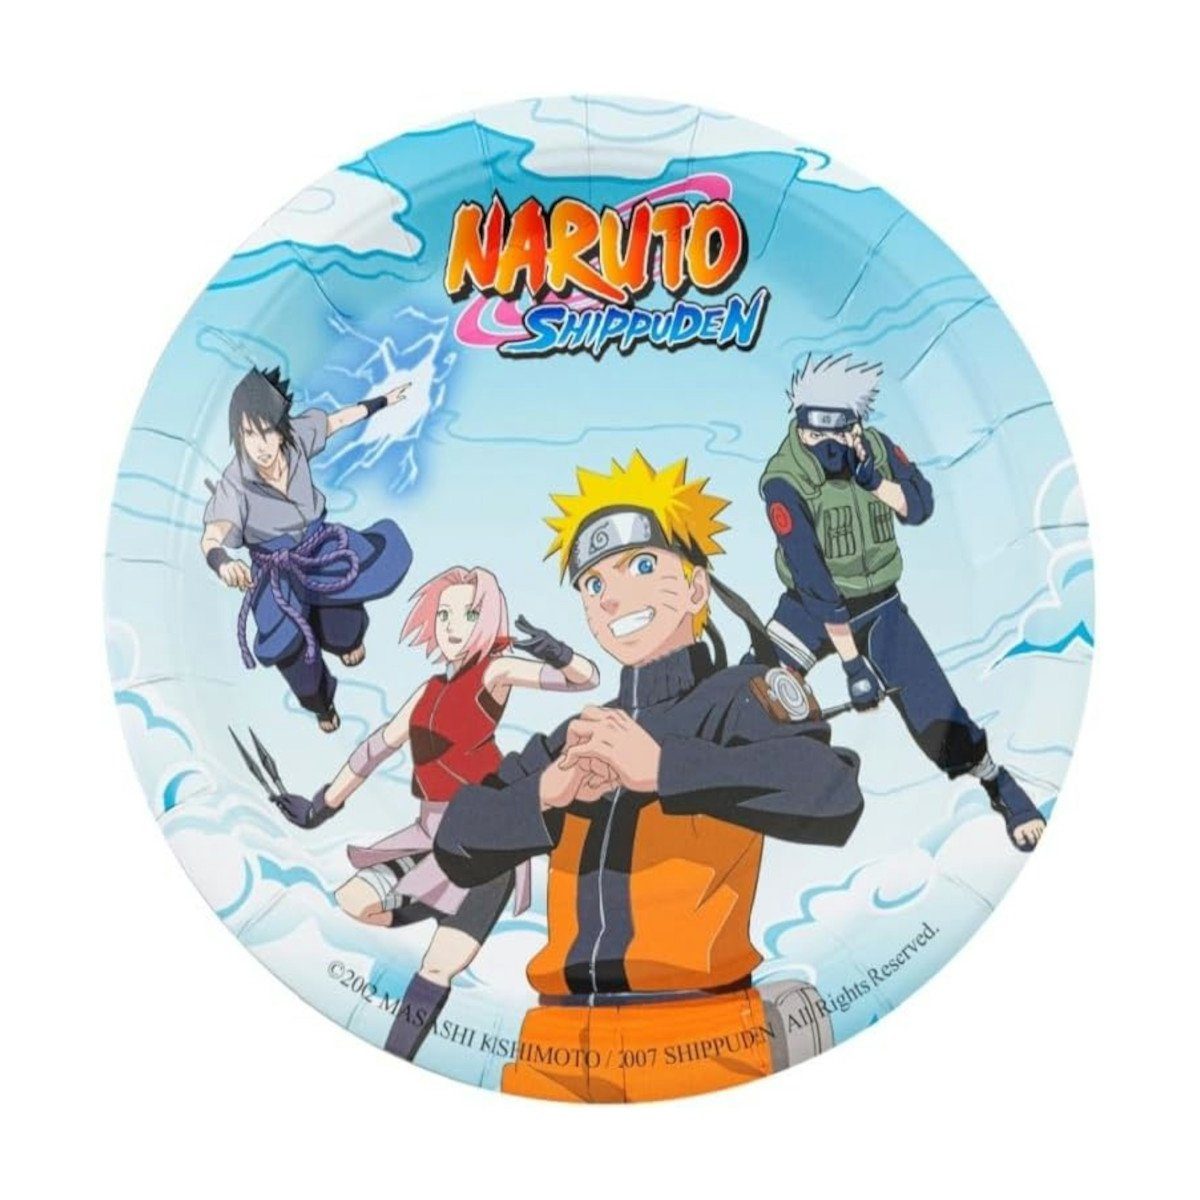 Einweggeschirr-Set CHAKS - Kindergeburtstags-Set Naruto (69-tlg)